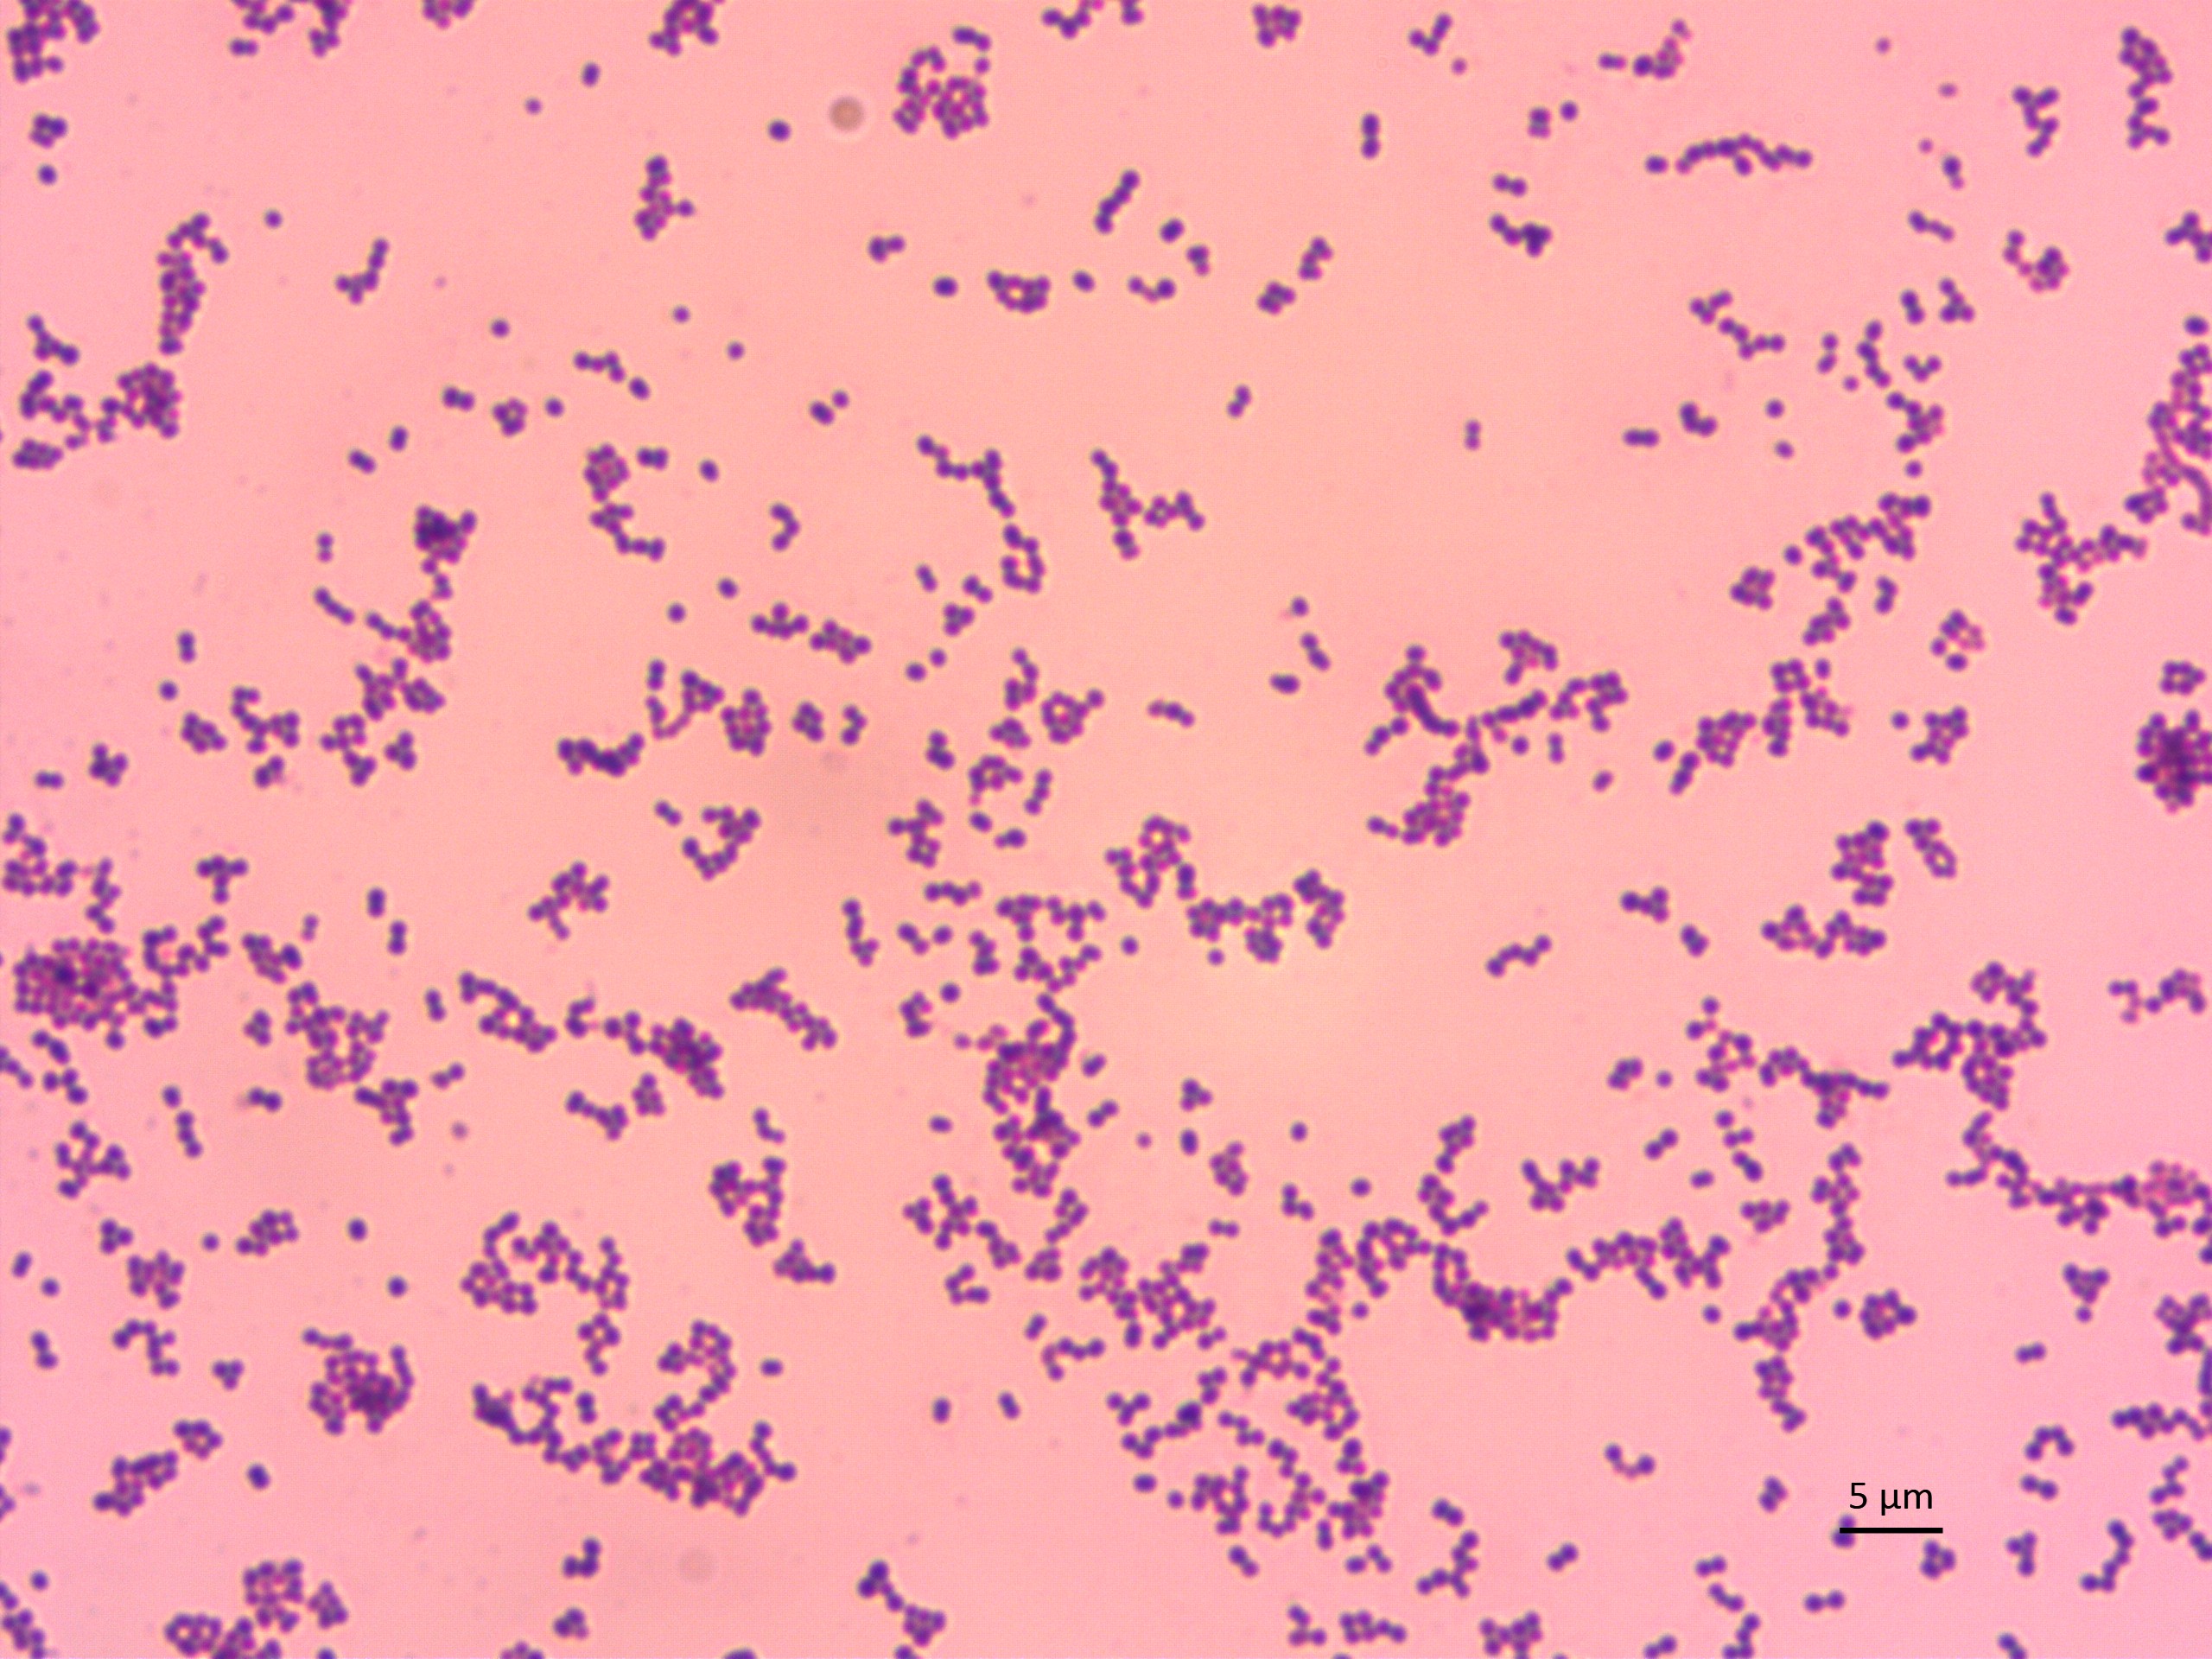 Pdf Identification Of Key Determinants Of Staphylococcus Aureus Vaginal Colonization